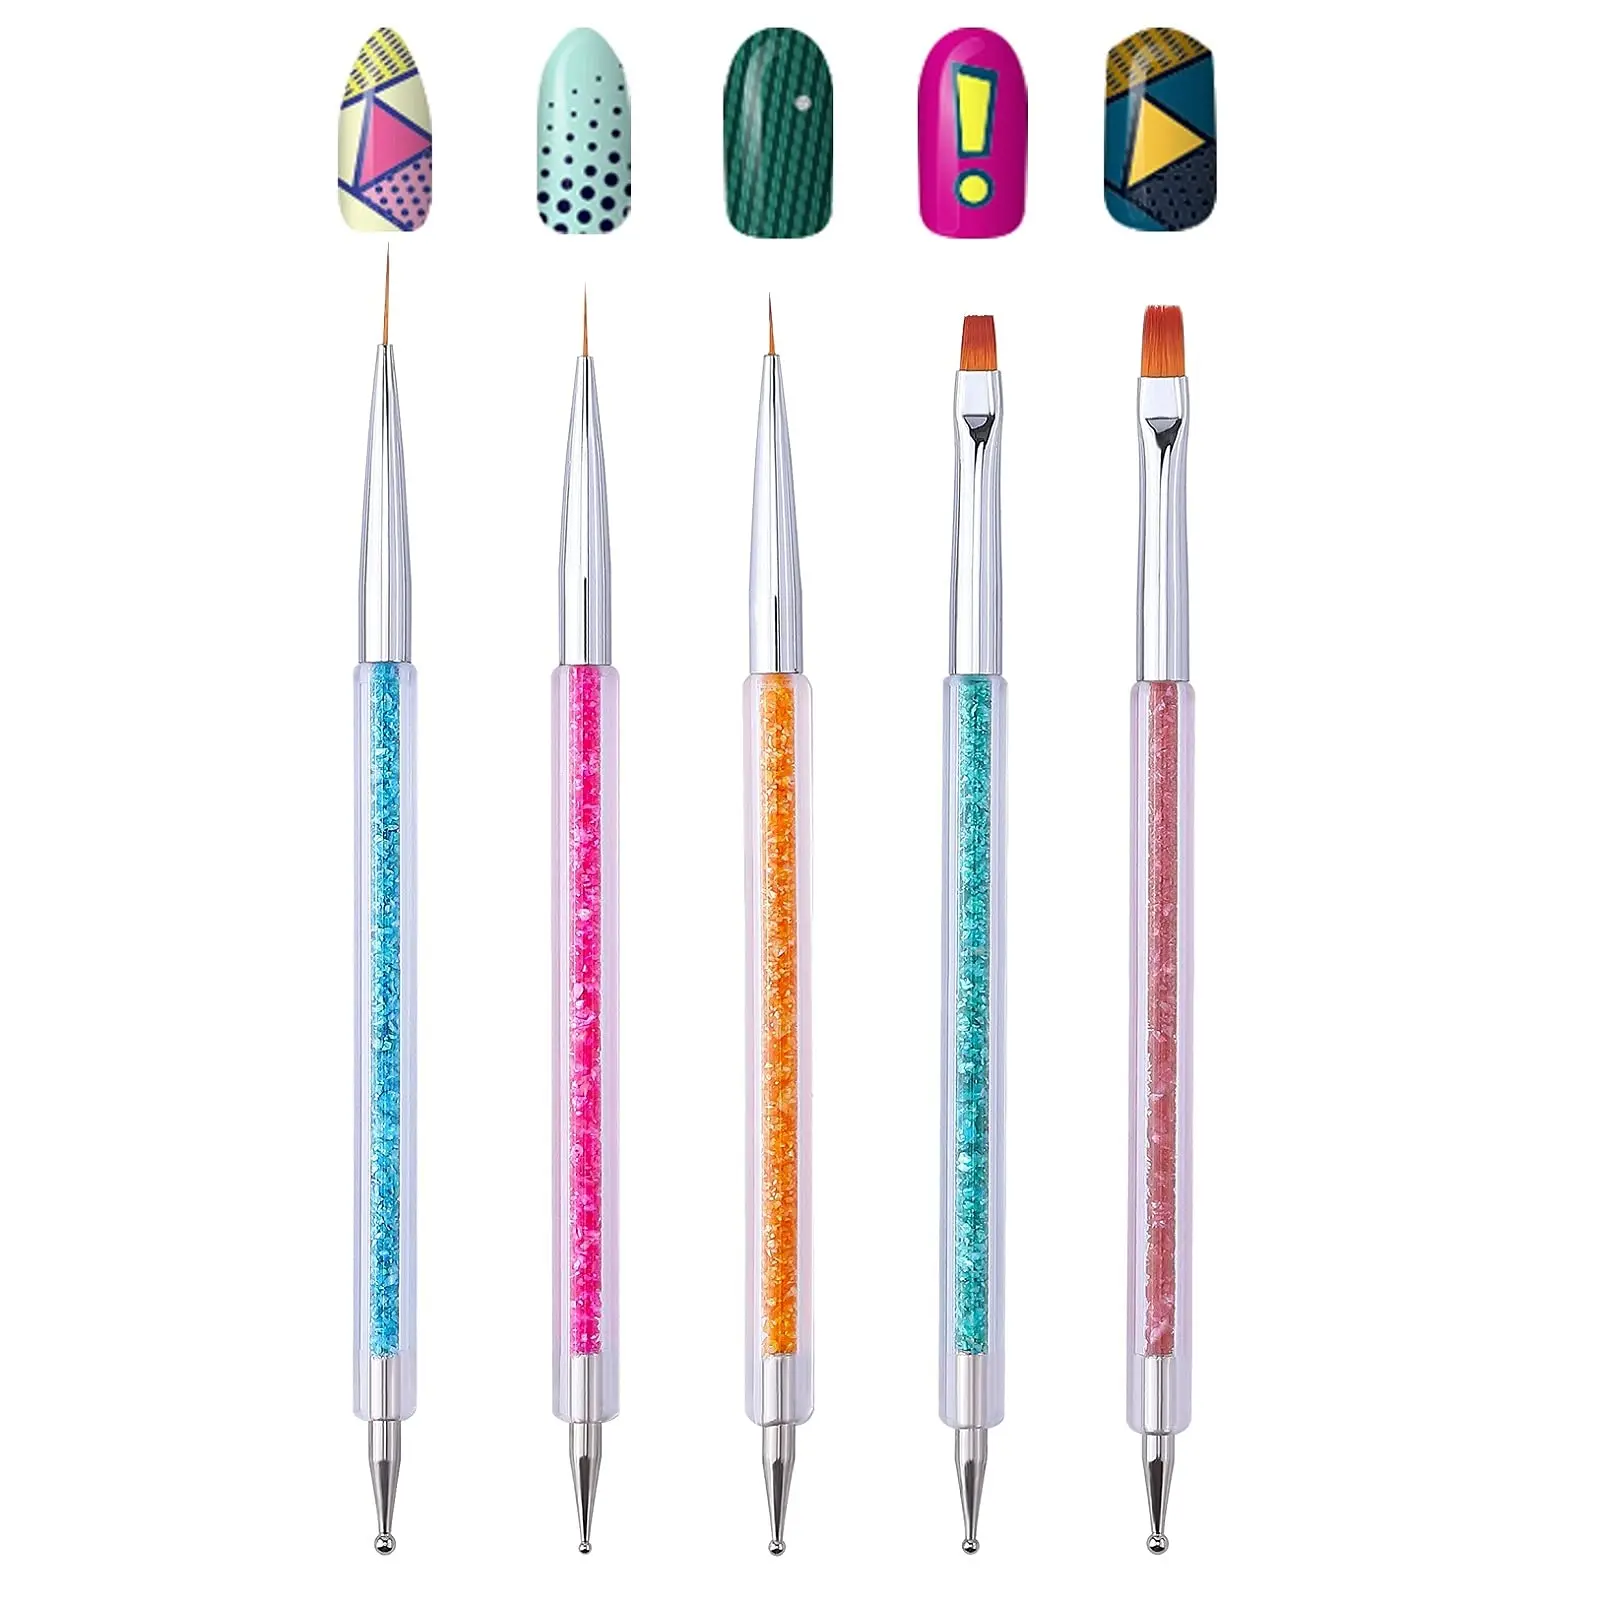 

Professional Nail Liner Tools Nail Art Brushes Double Ended Brush and Dotting Tool Kit Elegant Nail Pen Set with Shiny Handles